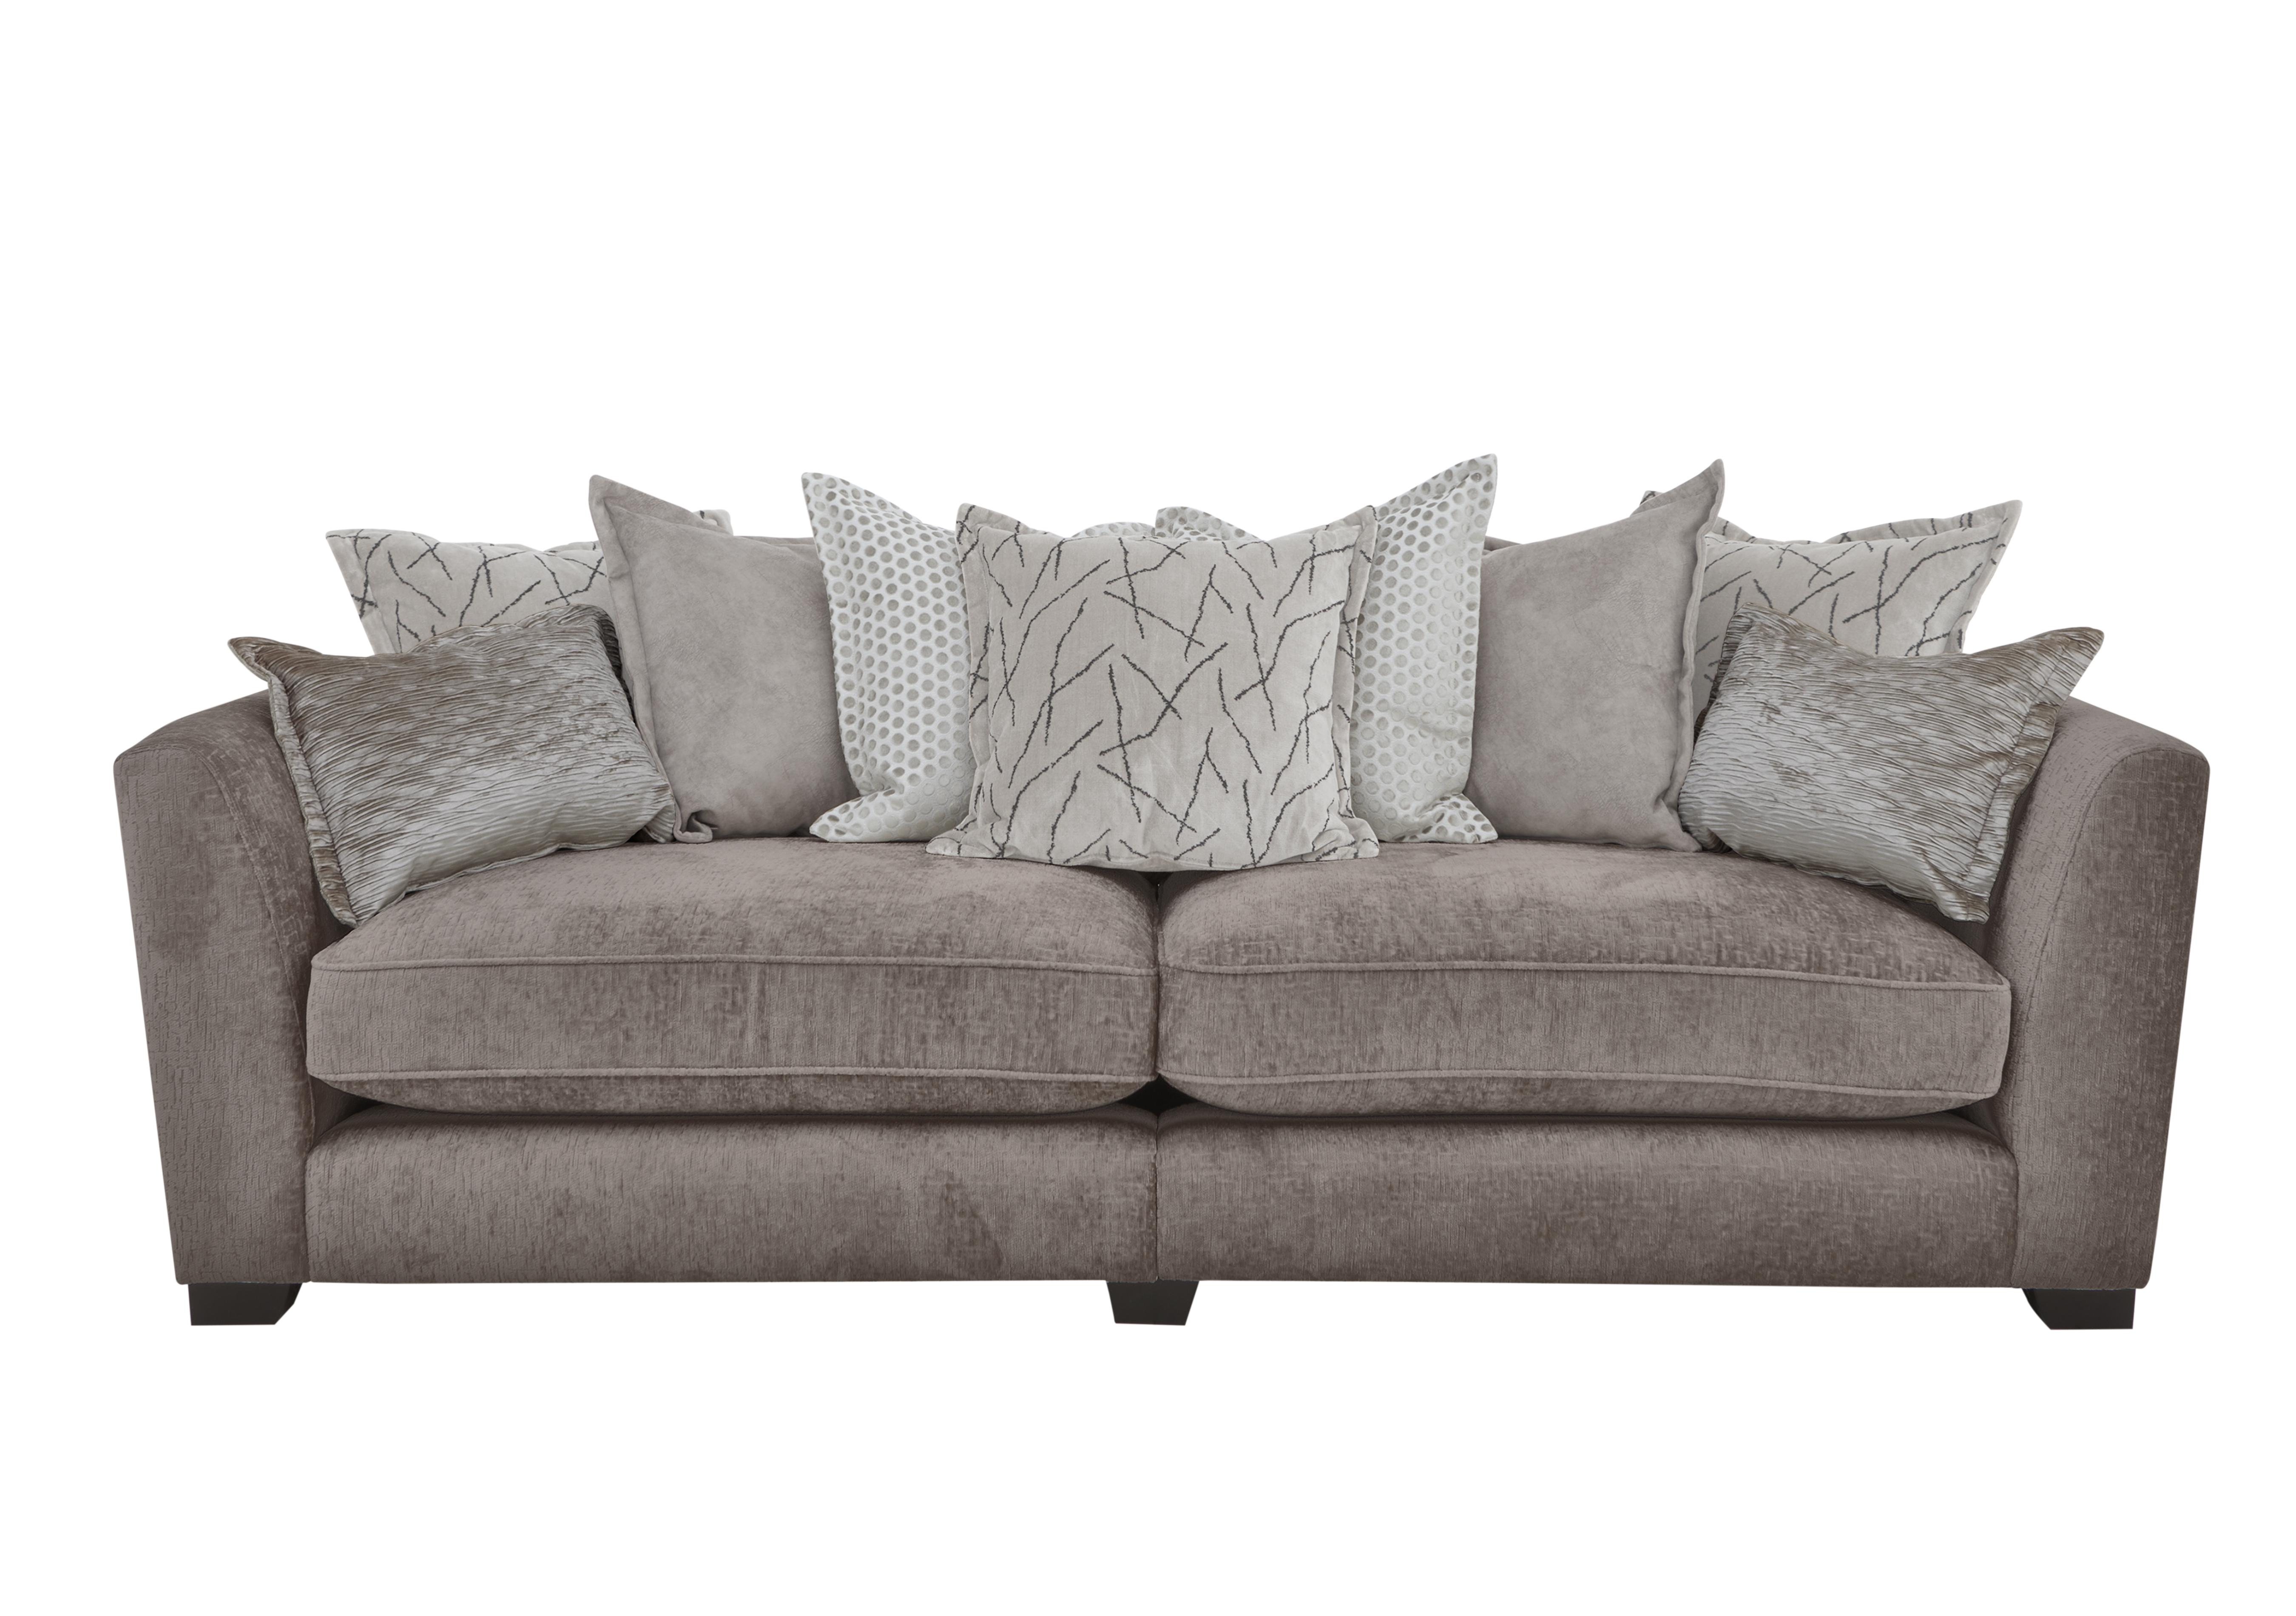 Boutique Lavish Fabric 4 Seater Split Scatter Back Sofa in Alexandra Grey on Furniture Village